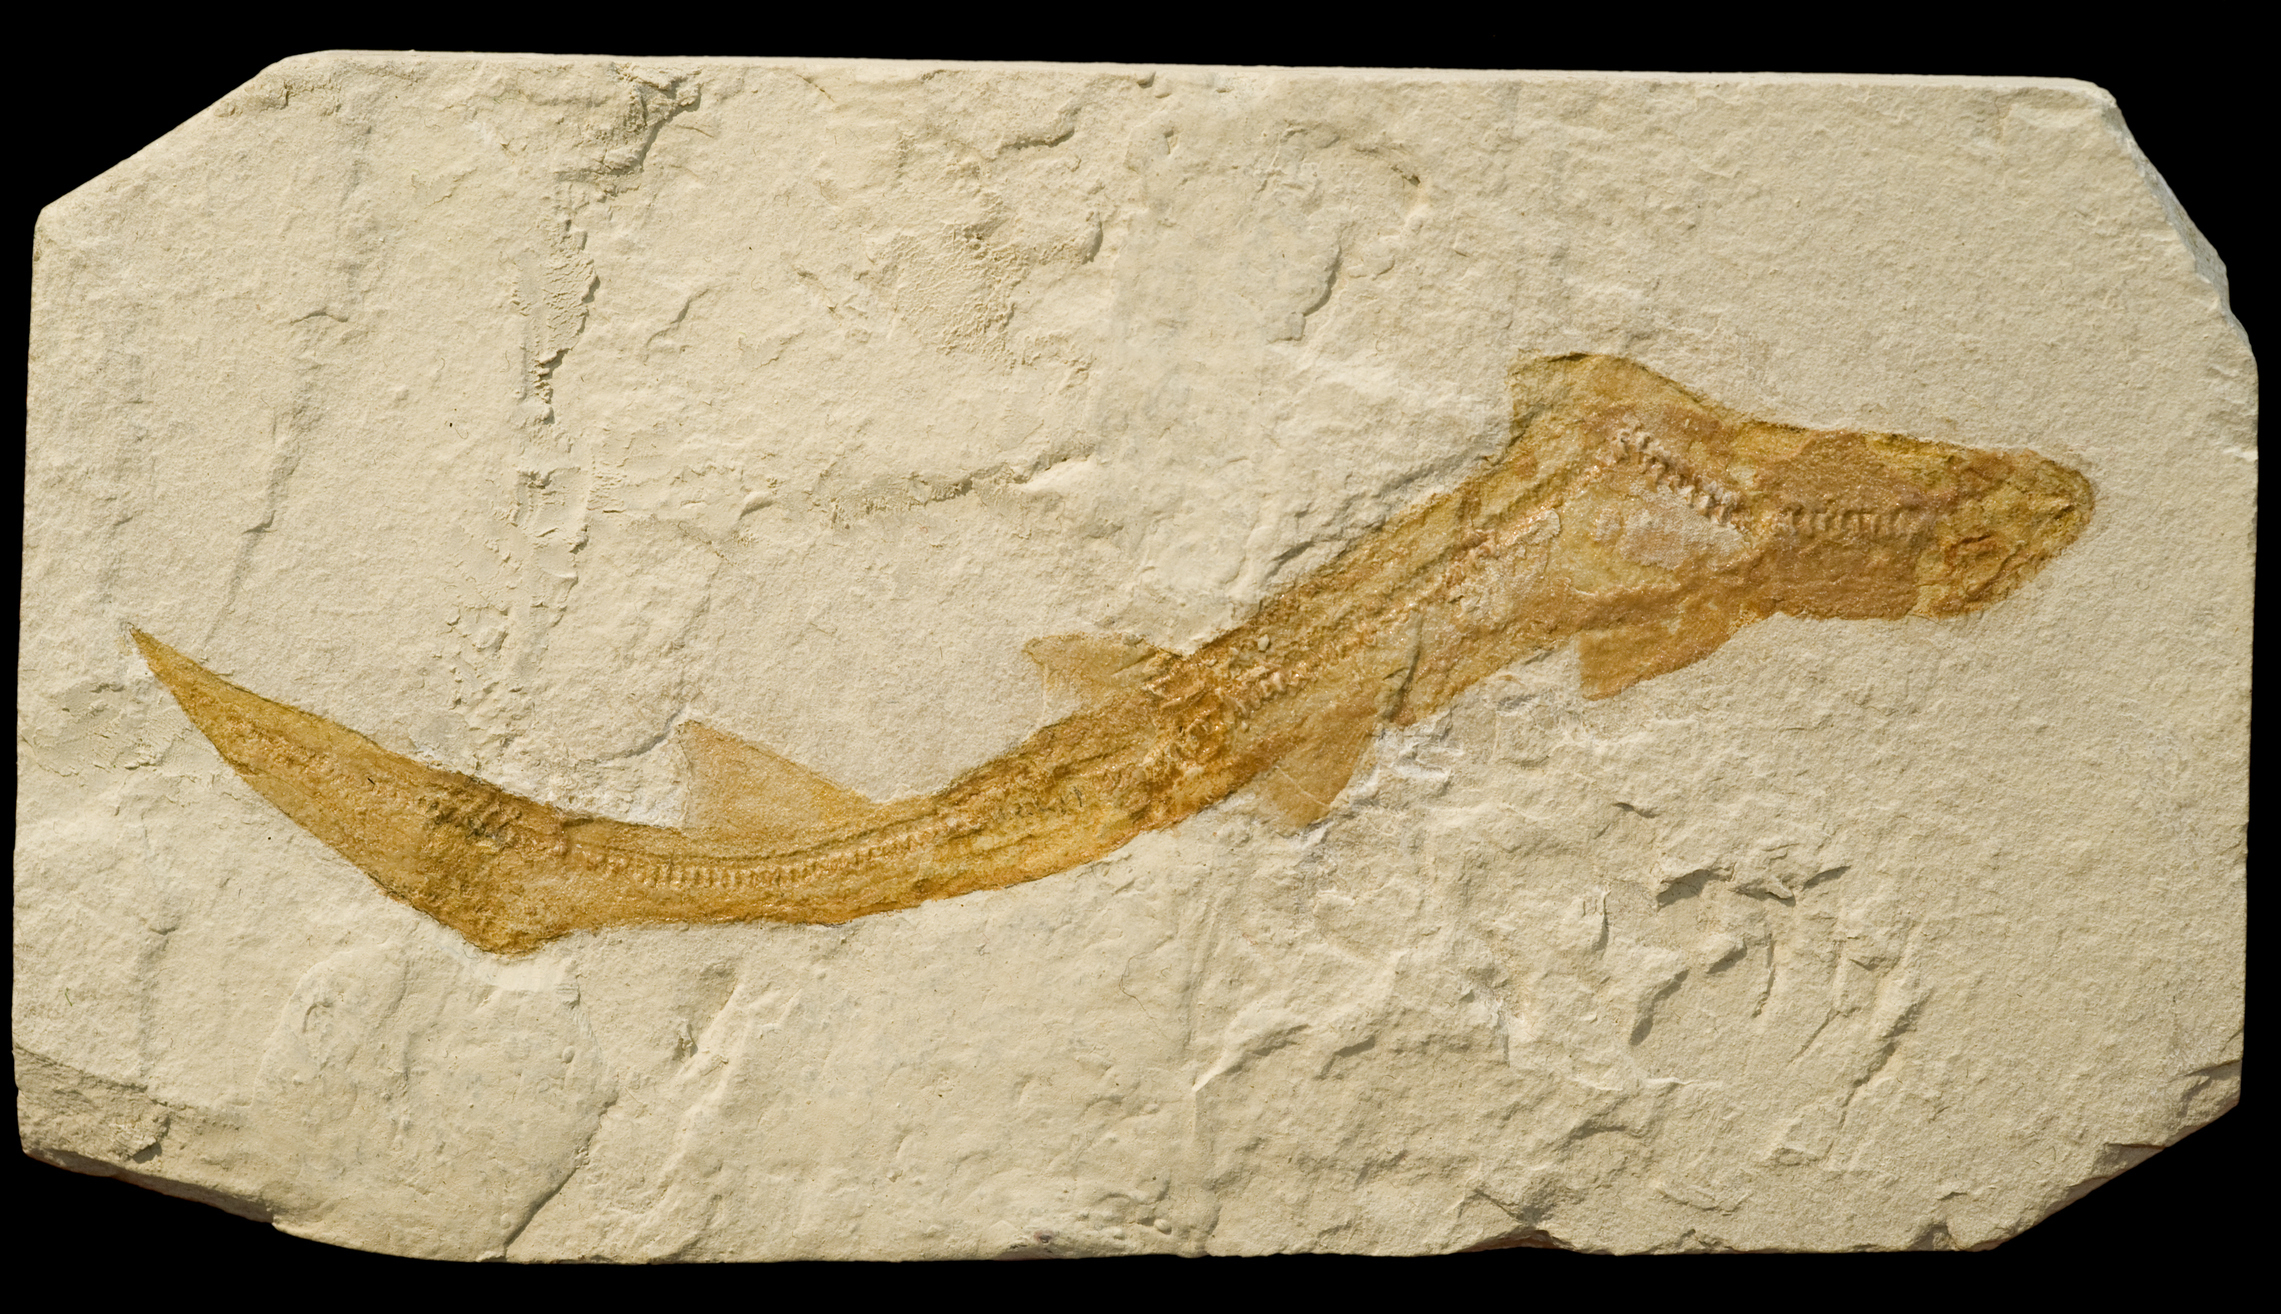 Fossilized fish embedded in a stone slab